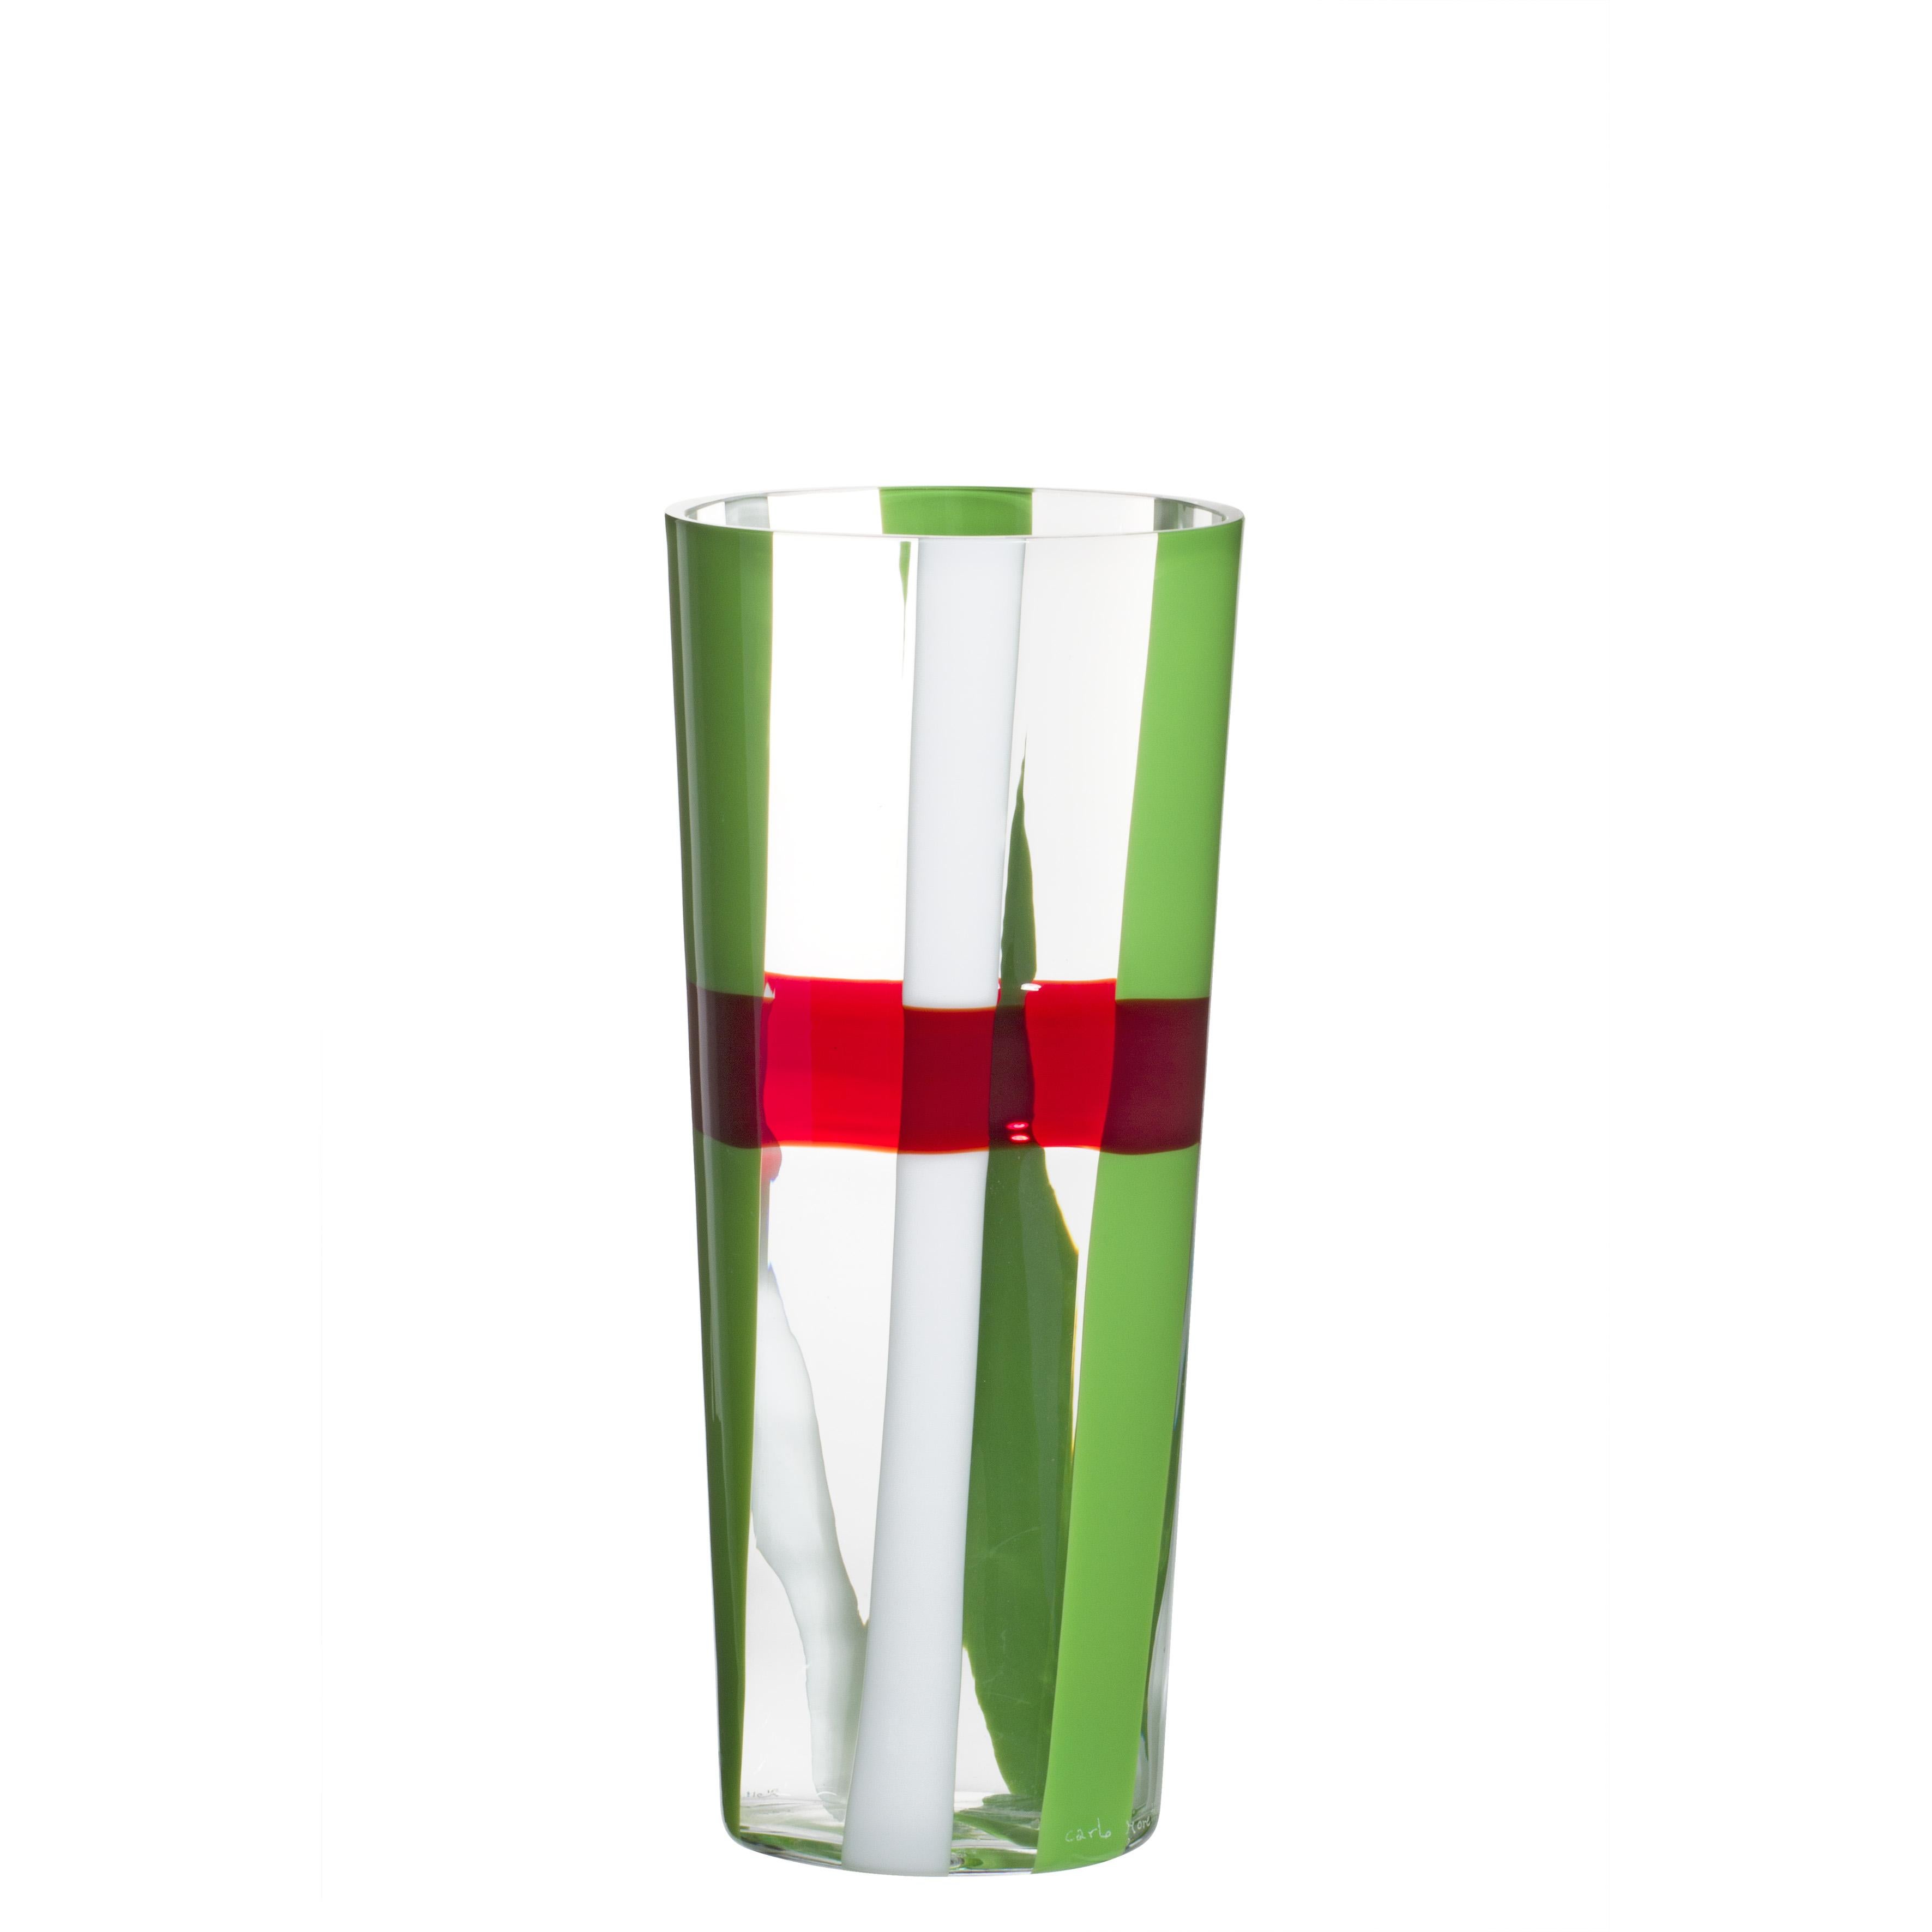 Small Troncocono Vase in Red and Green by Carlo Moretti